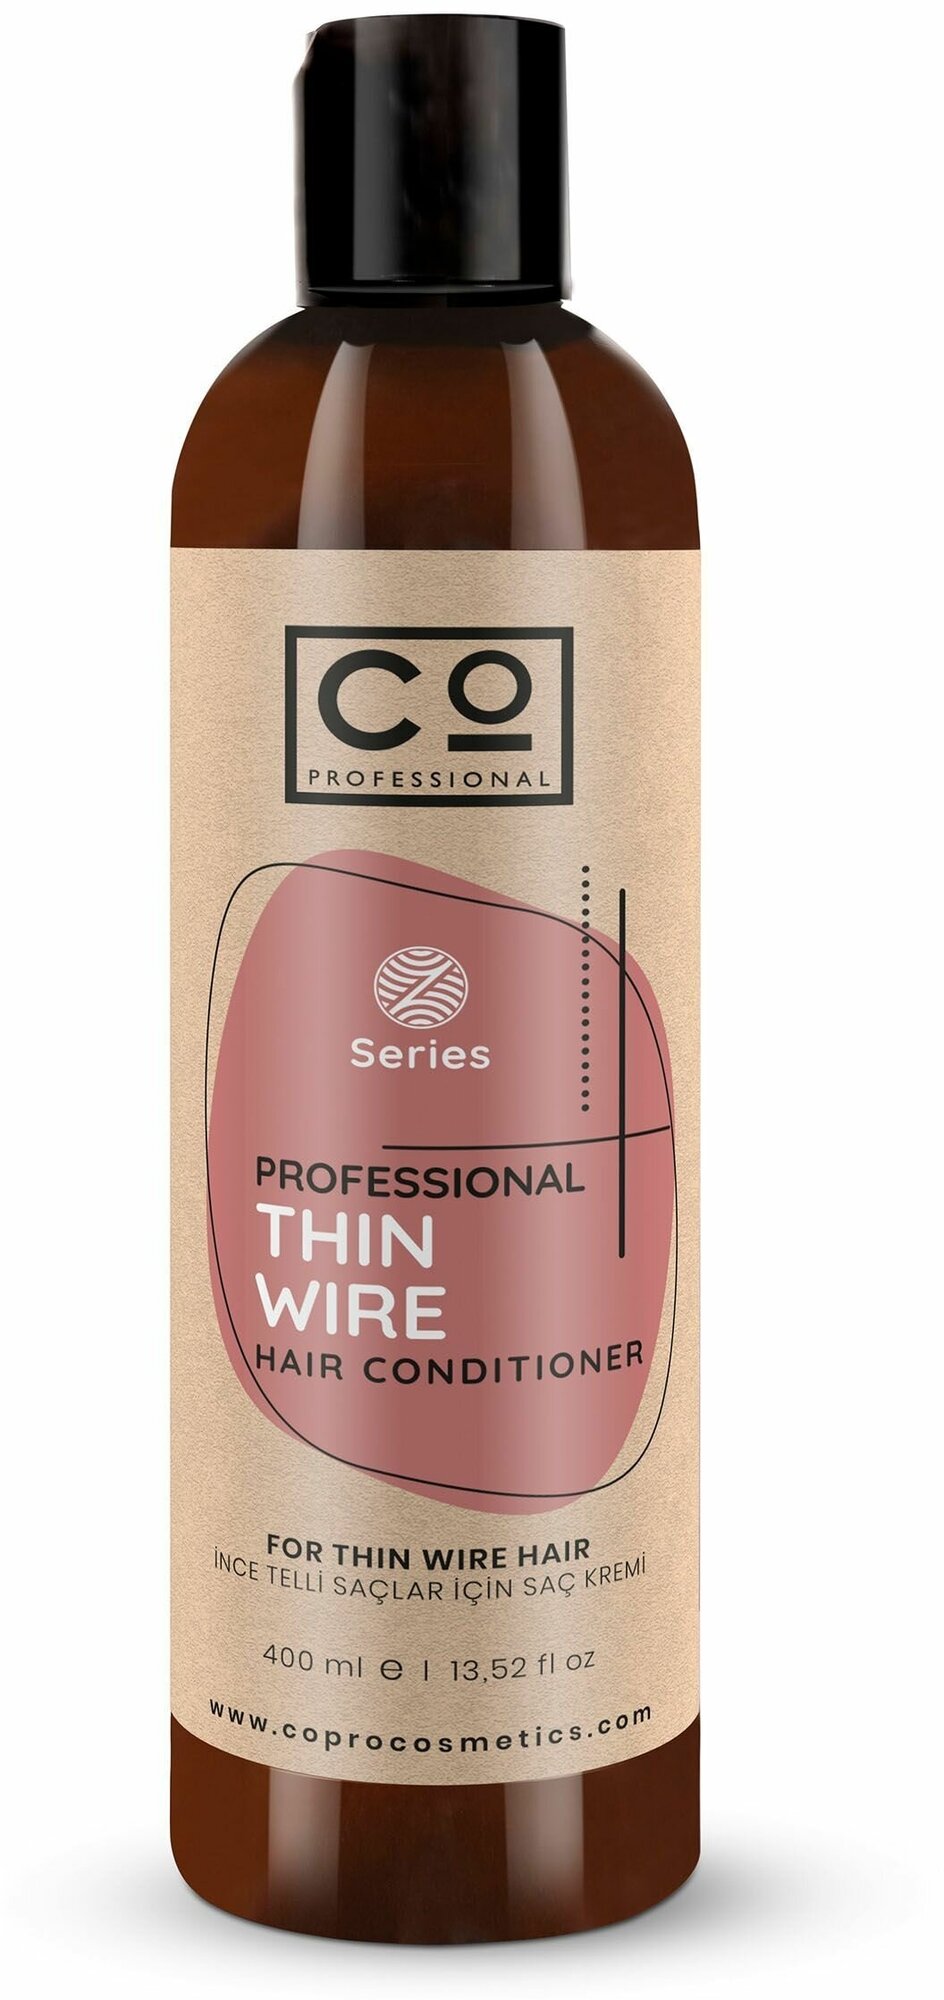 Кондиционер для тонких волос CO PROFESSIONAL Thin Wire Hair Conditioner, 400 мл